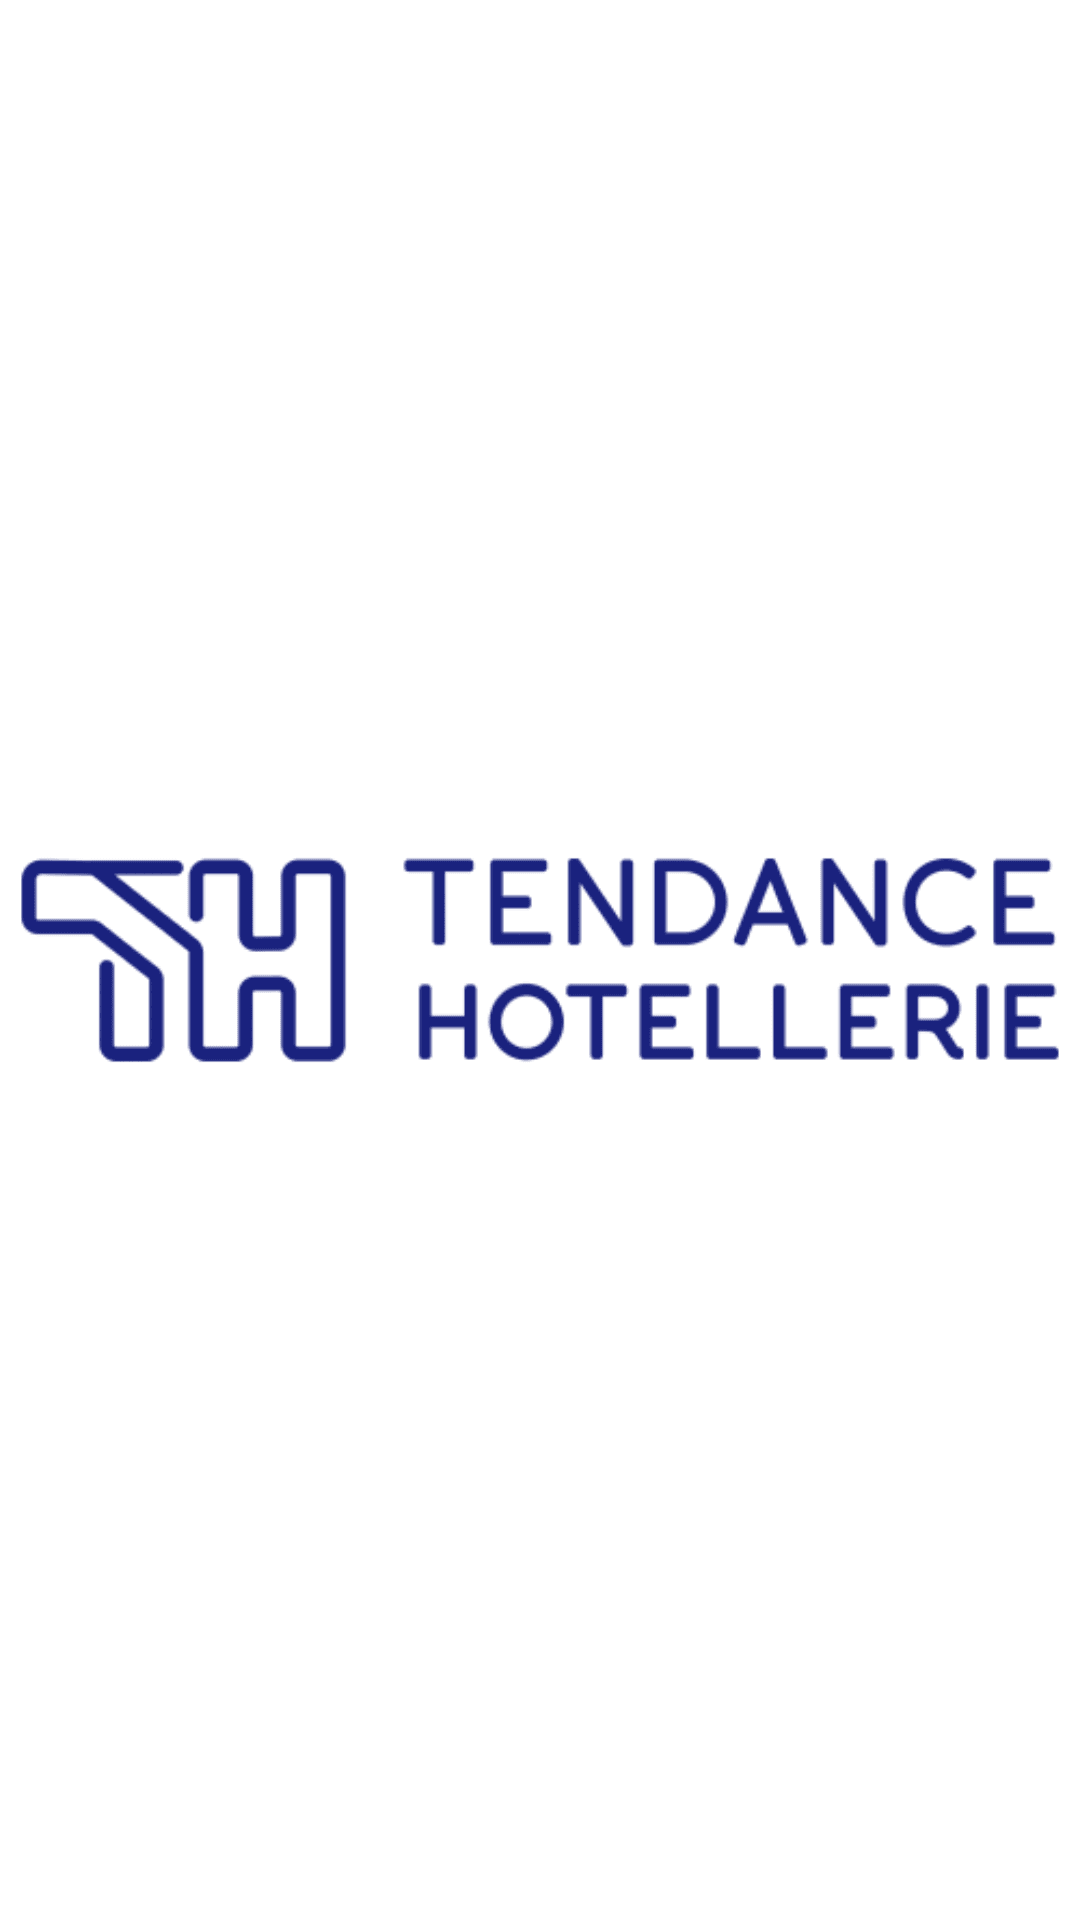 660/Tendance_hotellerie.png